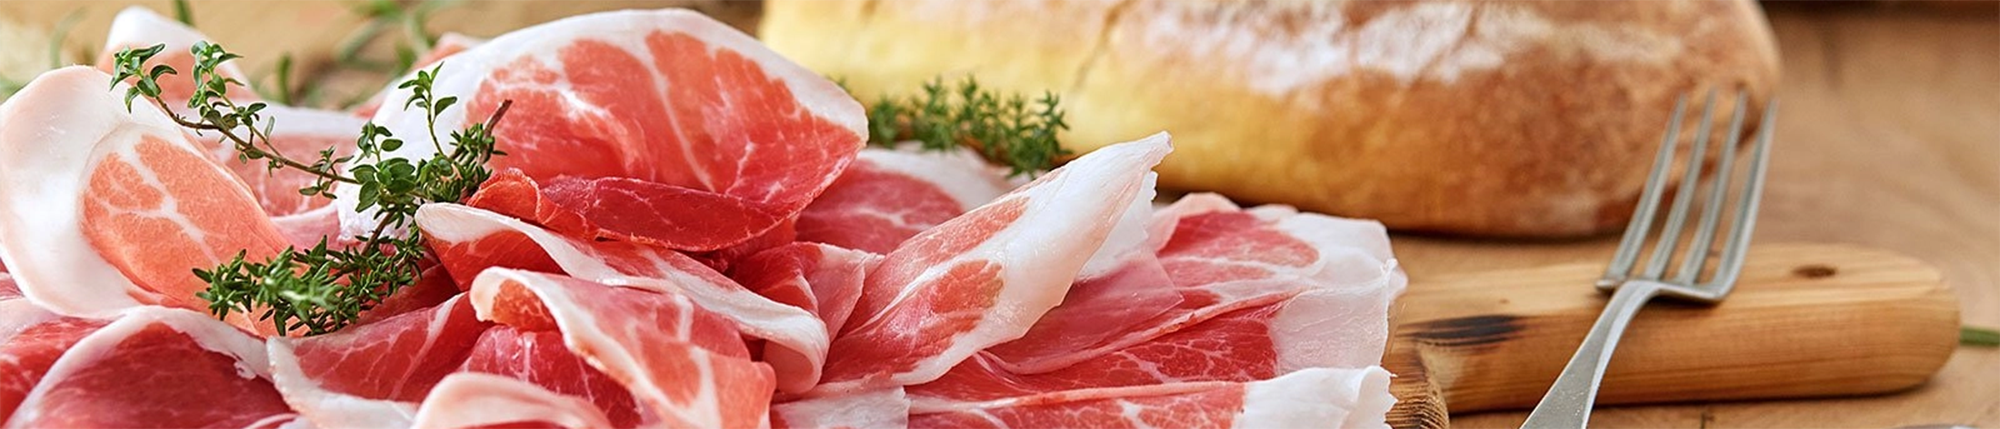 Ham uit Parma BOB - ParmaShop.com